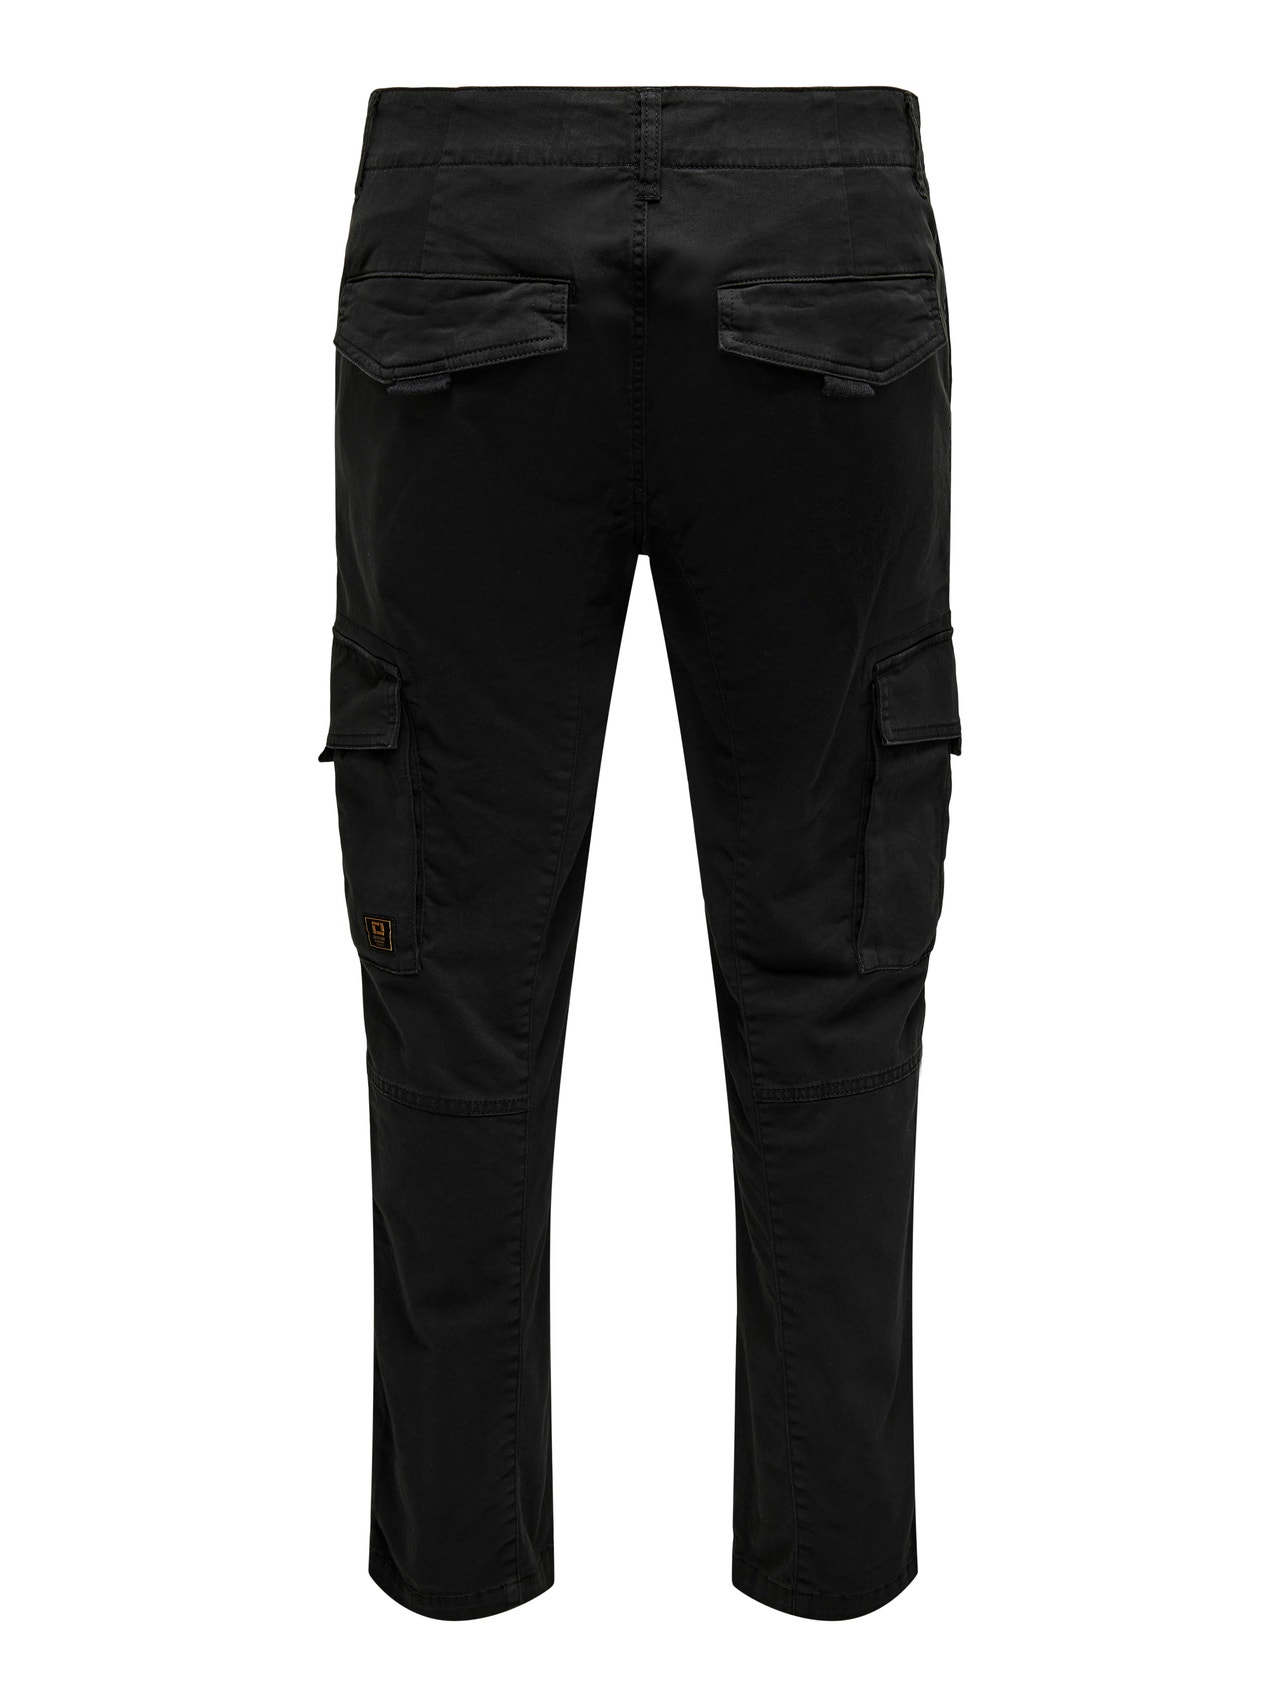 Blue Effect BOYS SUPER BAGGY PANT - Cargo trousers - black - Zalando.de